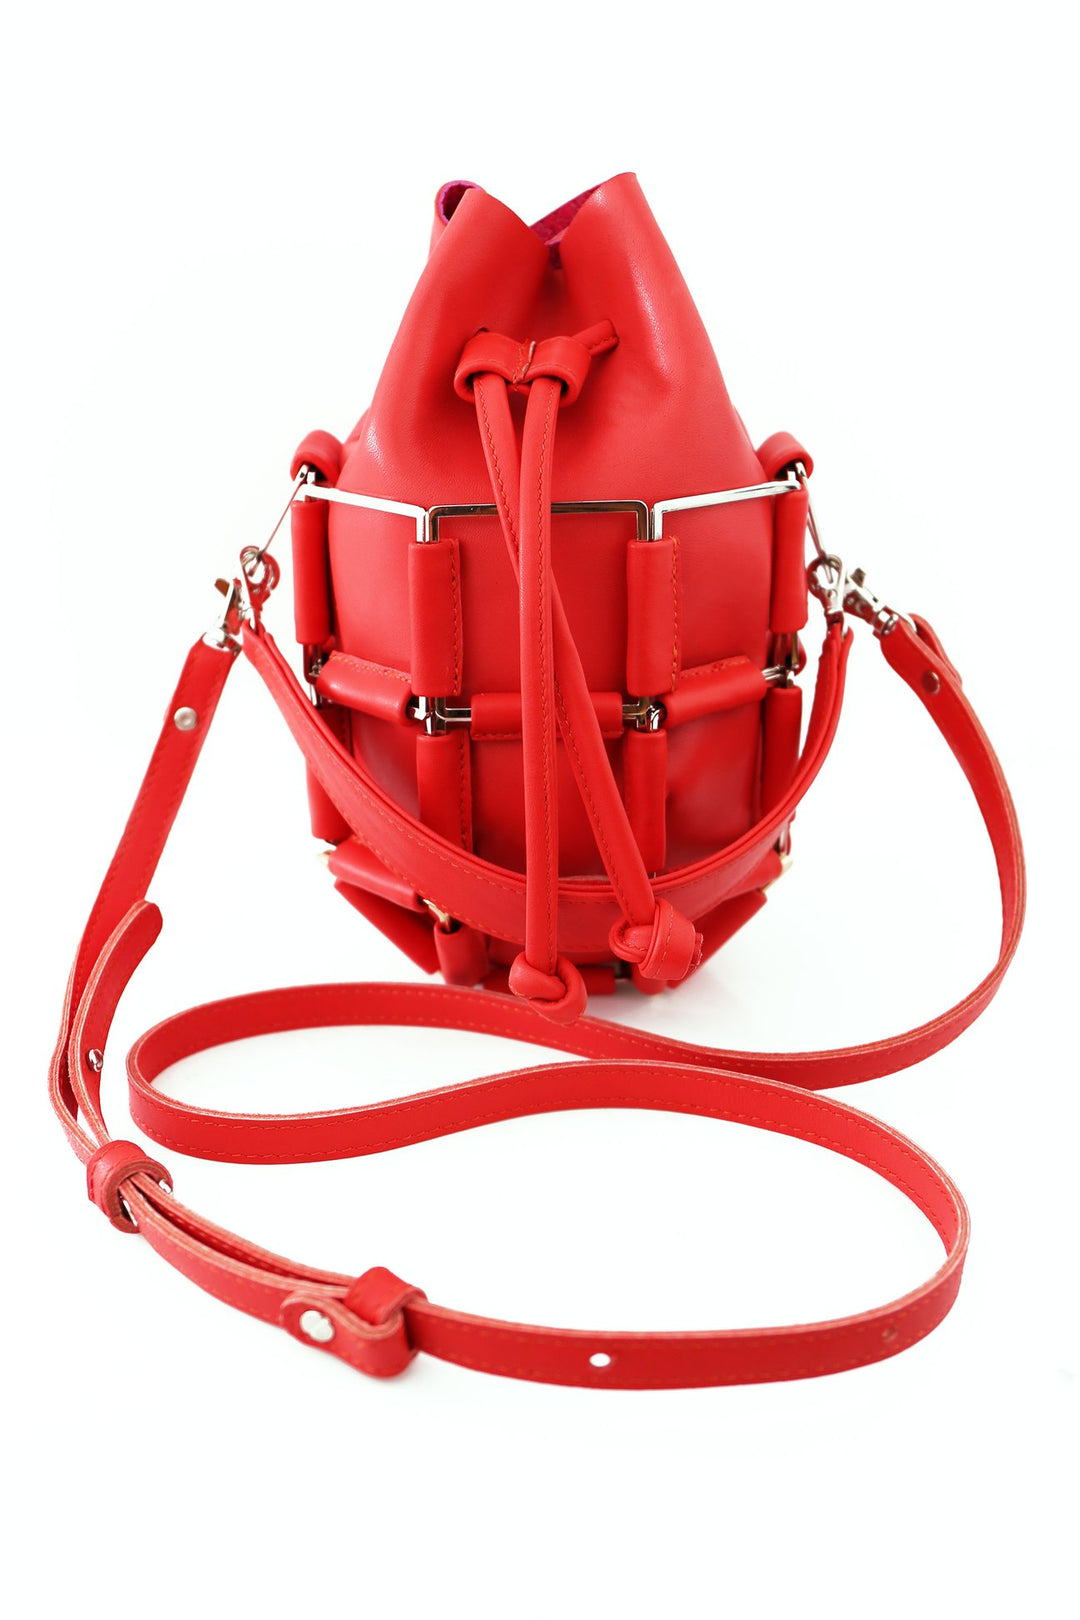 BruceGlen Grenade Bag in Red Cherry Bomb